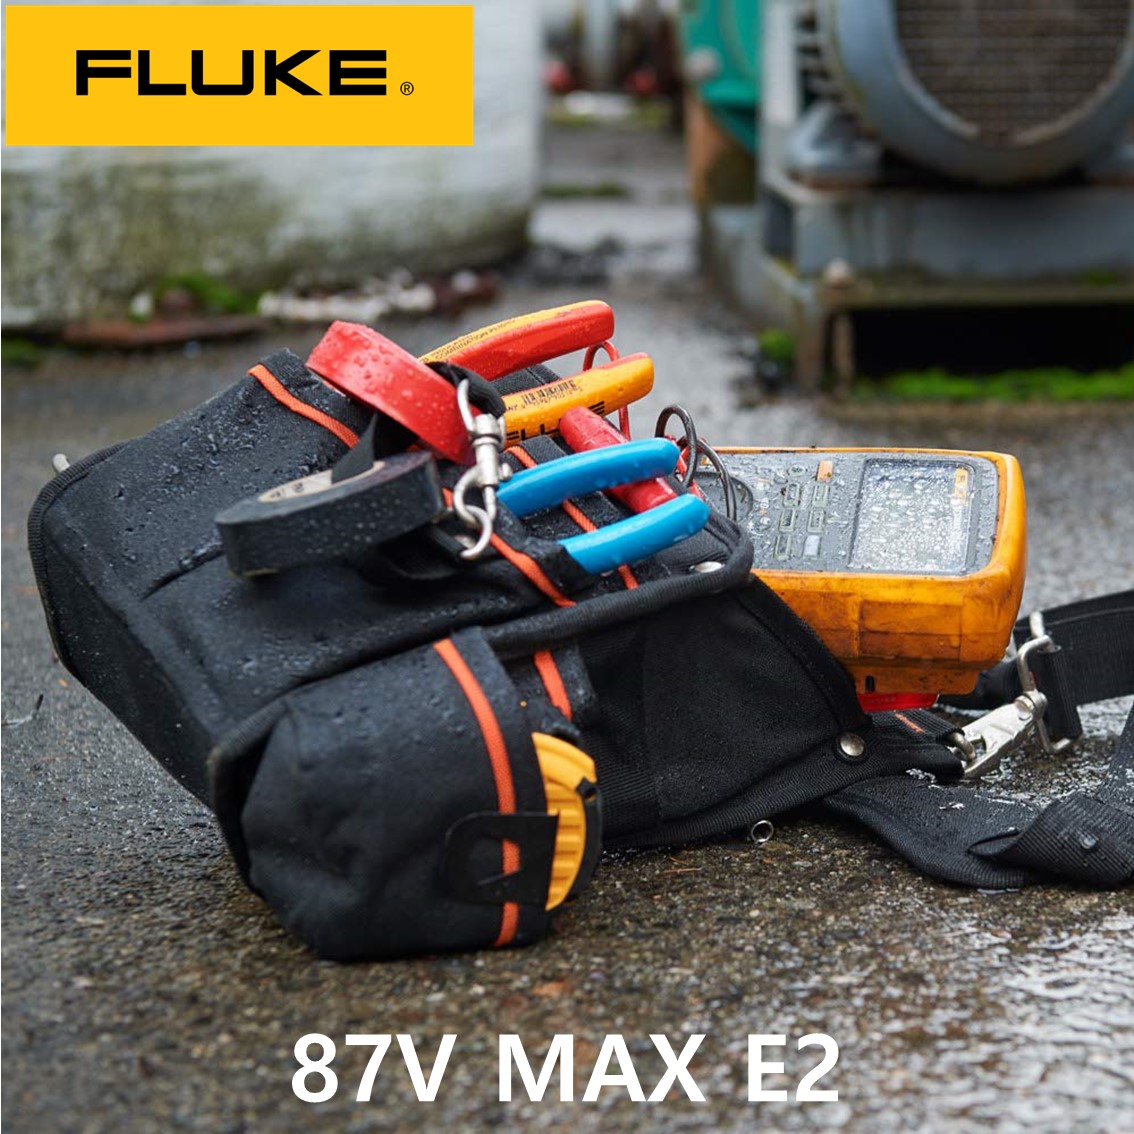 [ FLUKE 87V MAX E2 KIT ] 정품 플루크 디지털 멀티미터, 멀티메타, 테스트기 87-5 MAX E2 (자석 스트랩,3mm프로브)